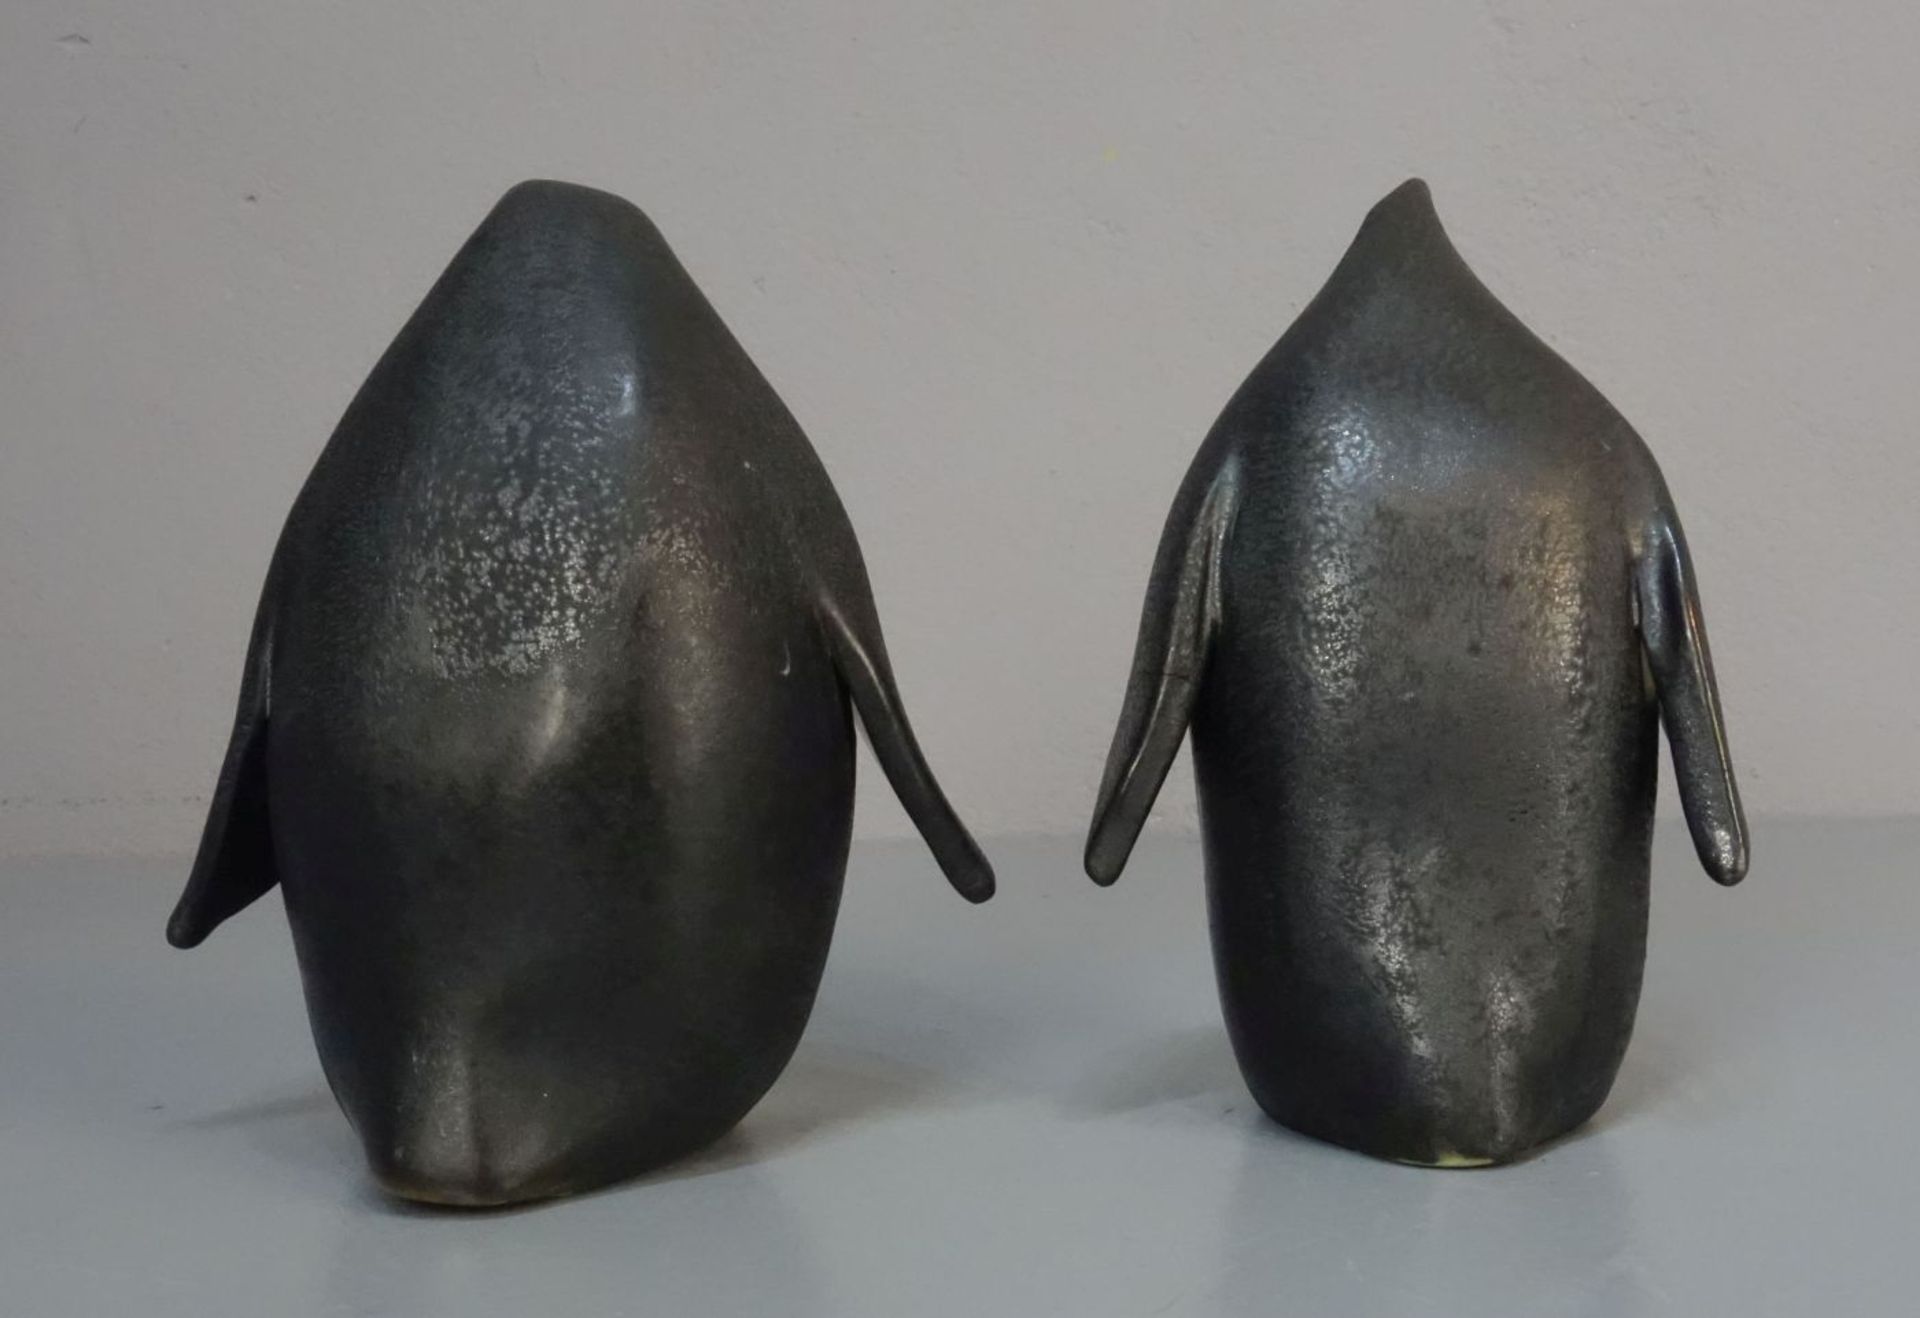 KERAMIKFIGUREN: "Pinguine" / ceramic penguins, Studiokeramik, heller Scherben, weiß, schwarz und - Bild 4 aus 5